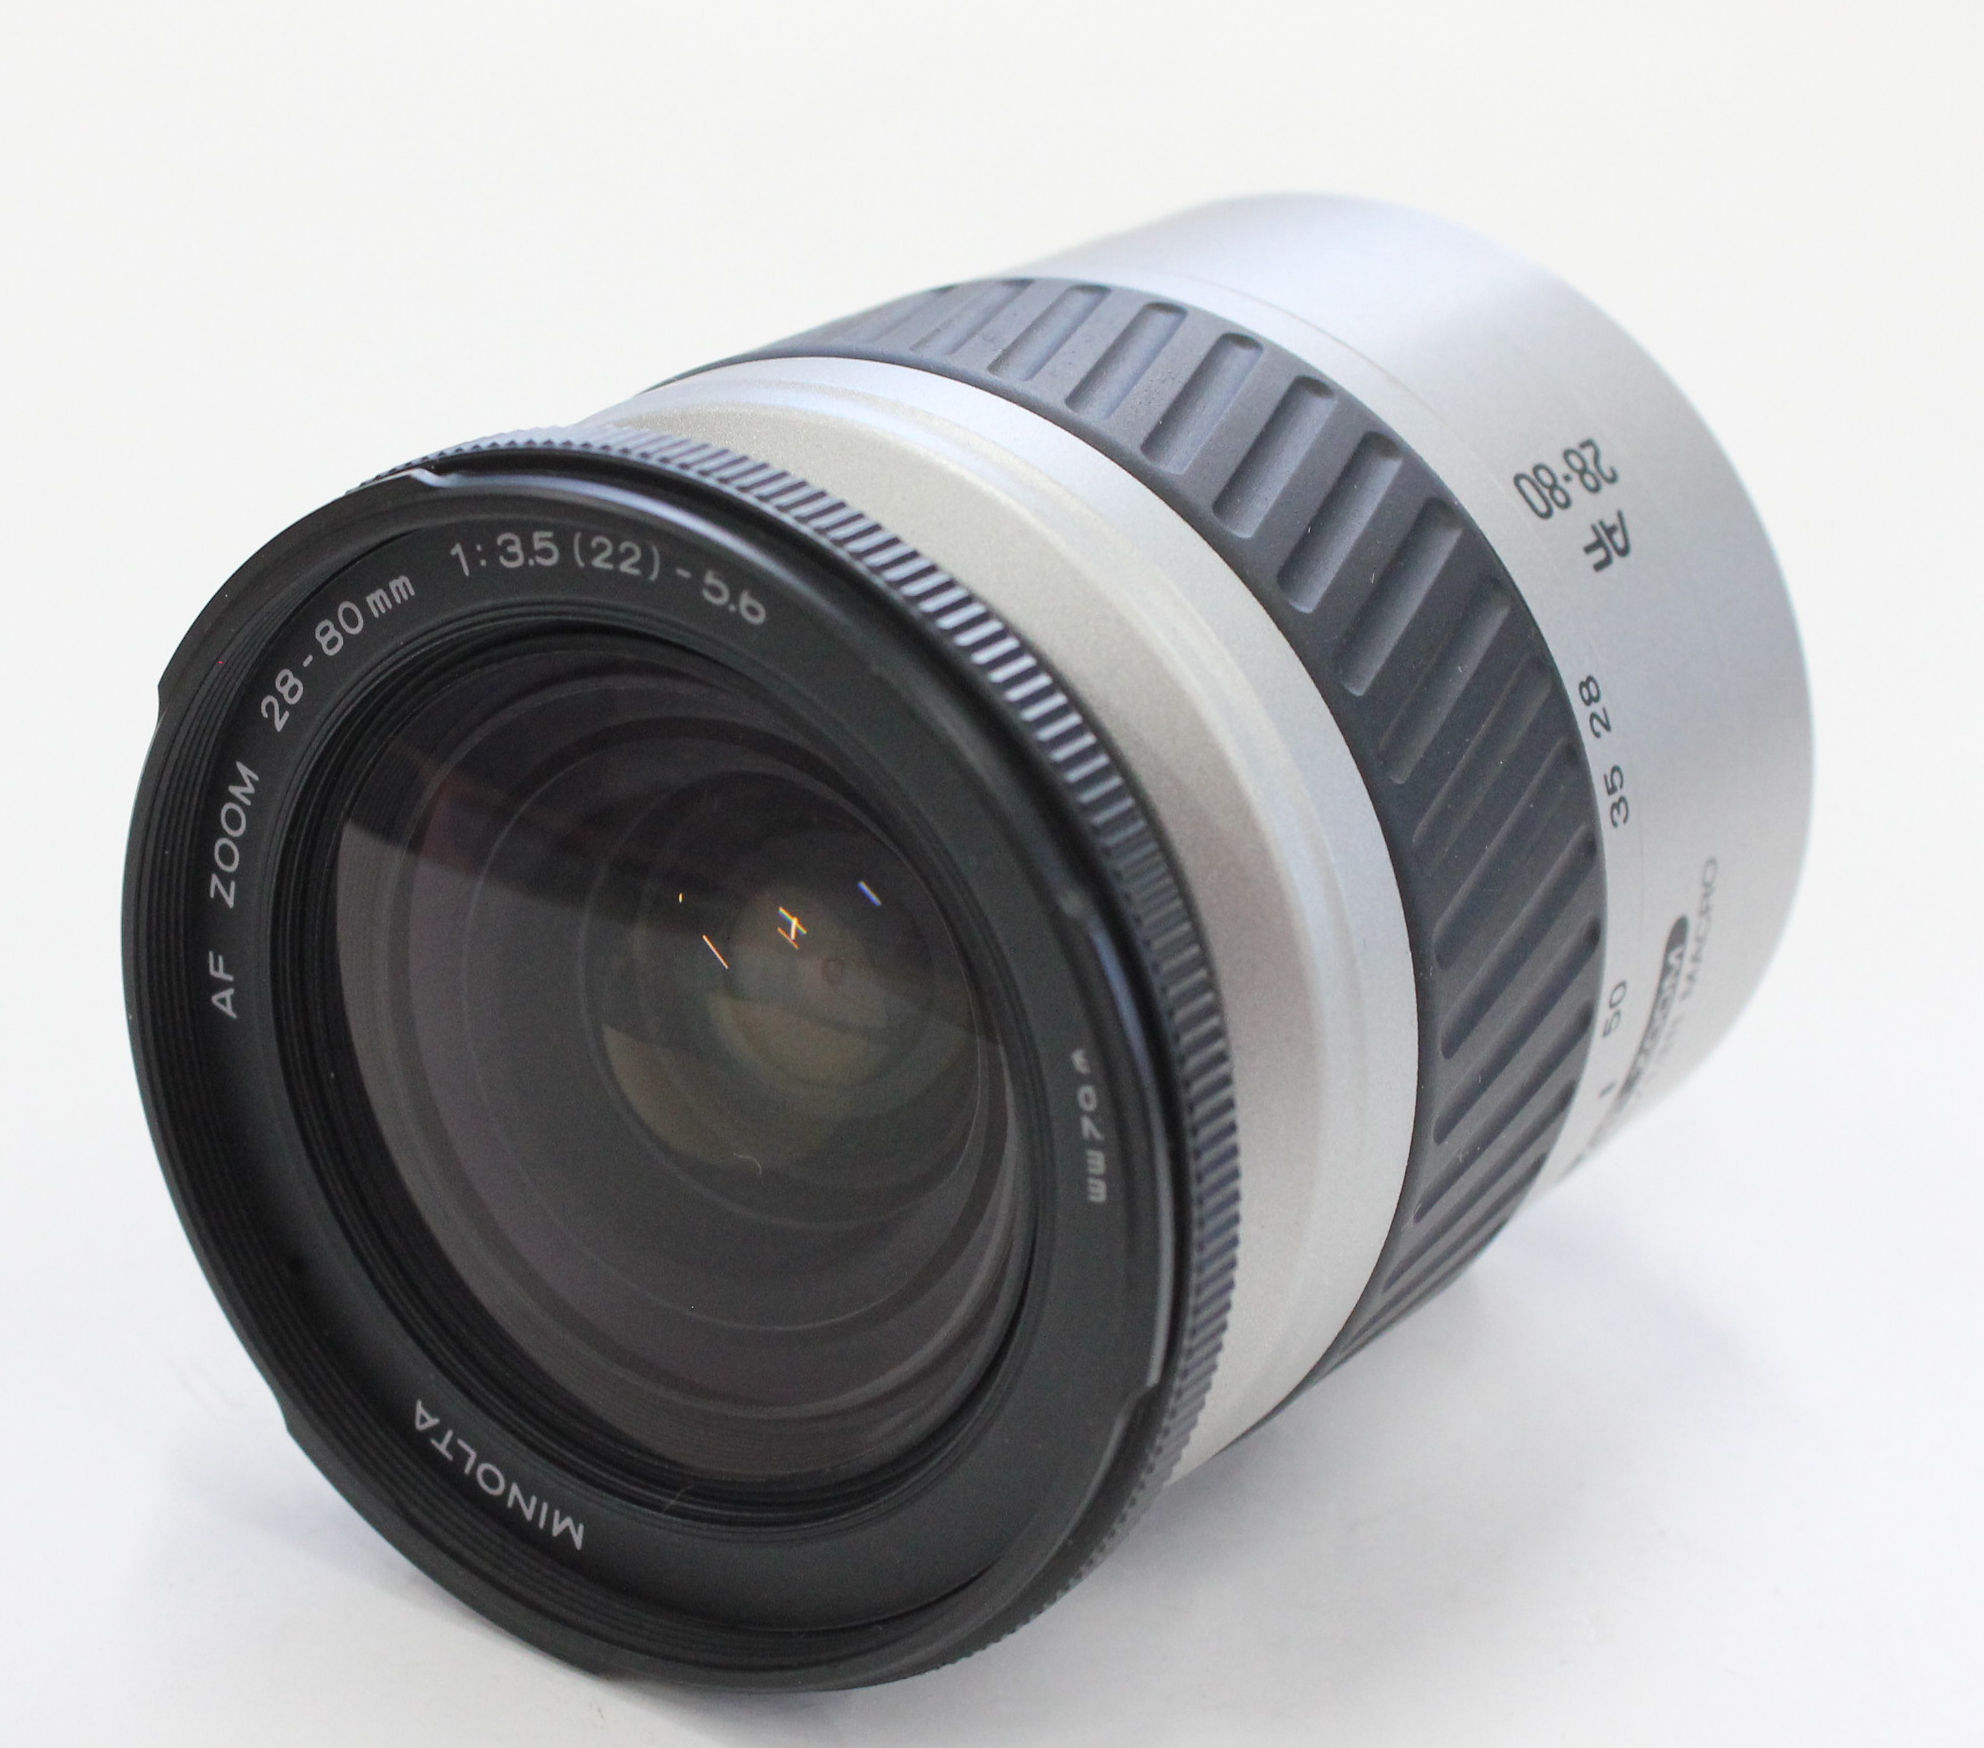 Japan Used Camera Shop | [Near Mint] MINOLTA AF ZOOM 28-80mm F/3.5-5.6 A-Mount Lens for Minolta or Sony